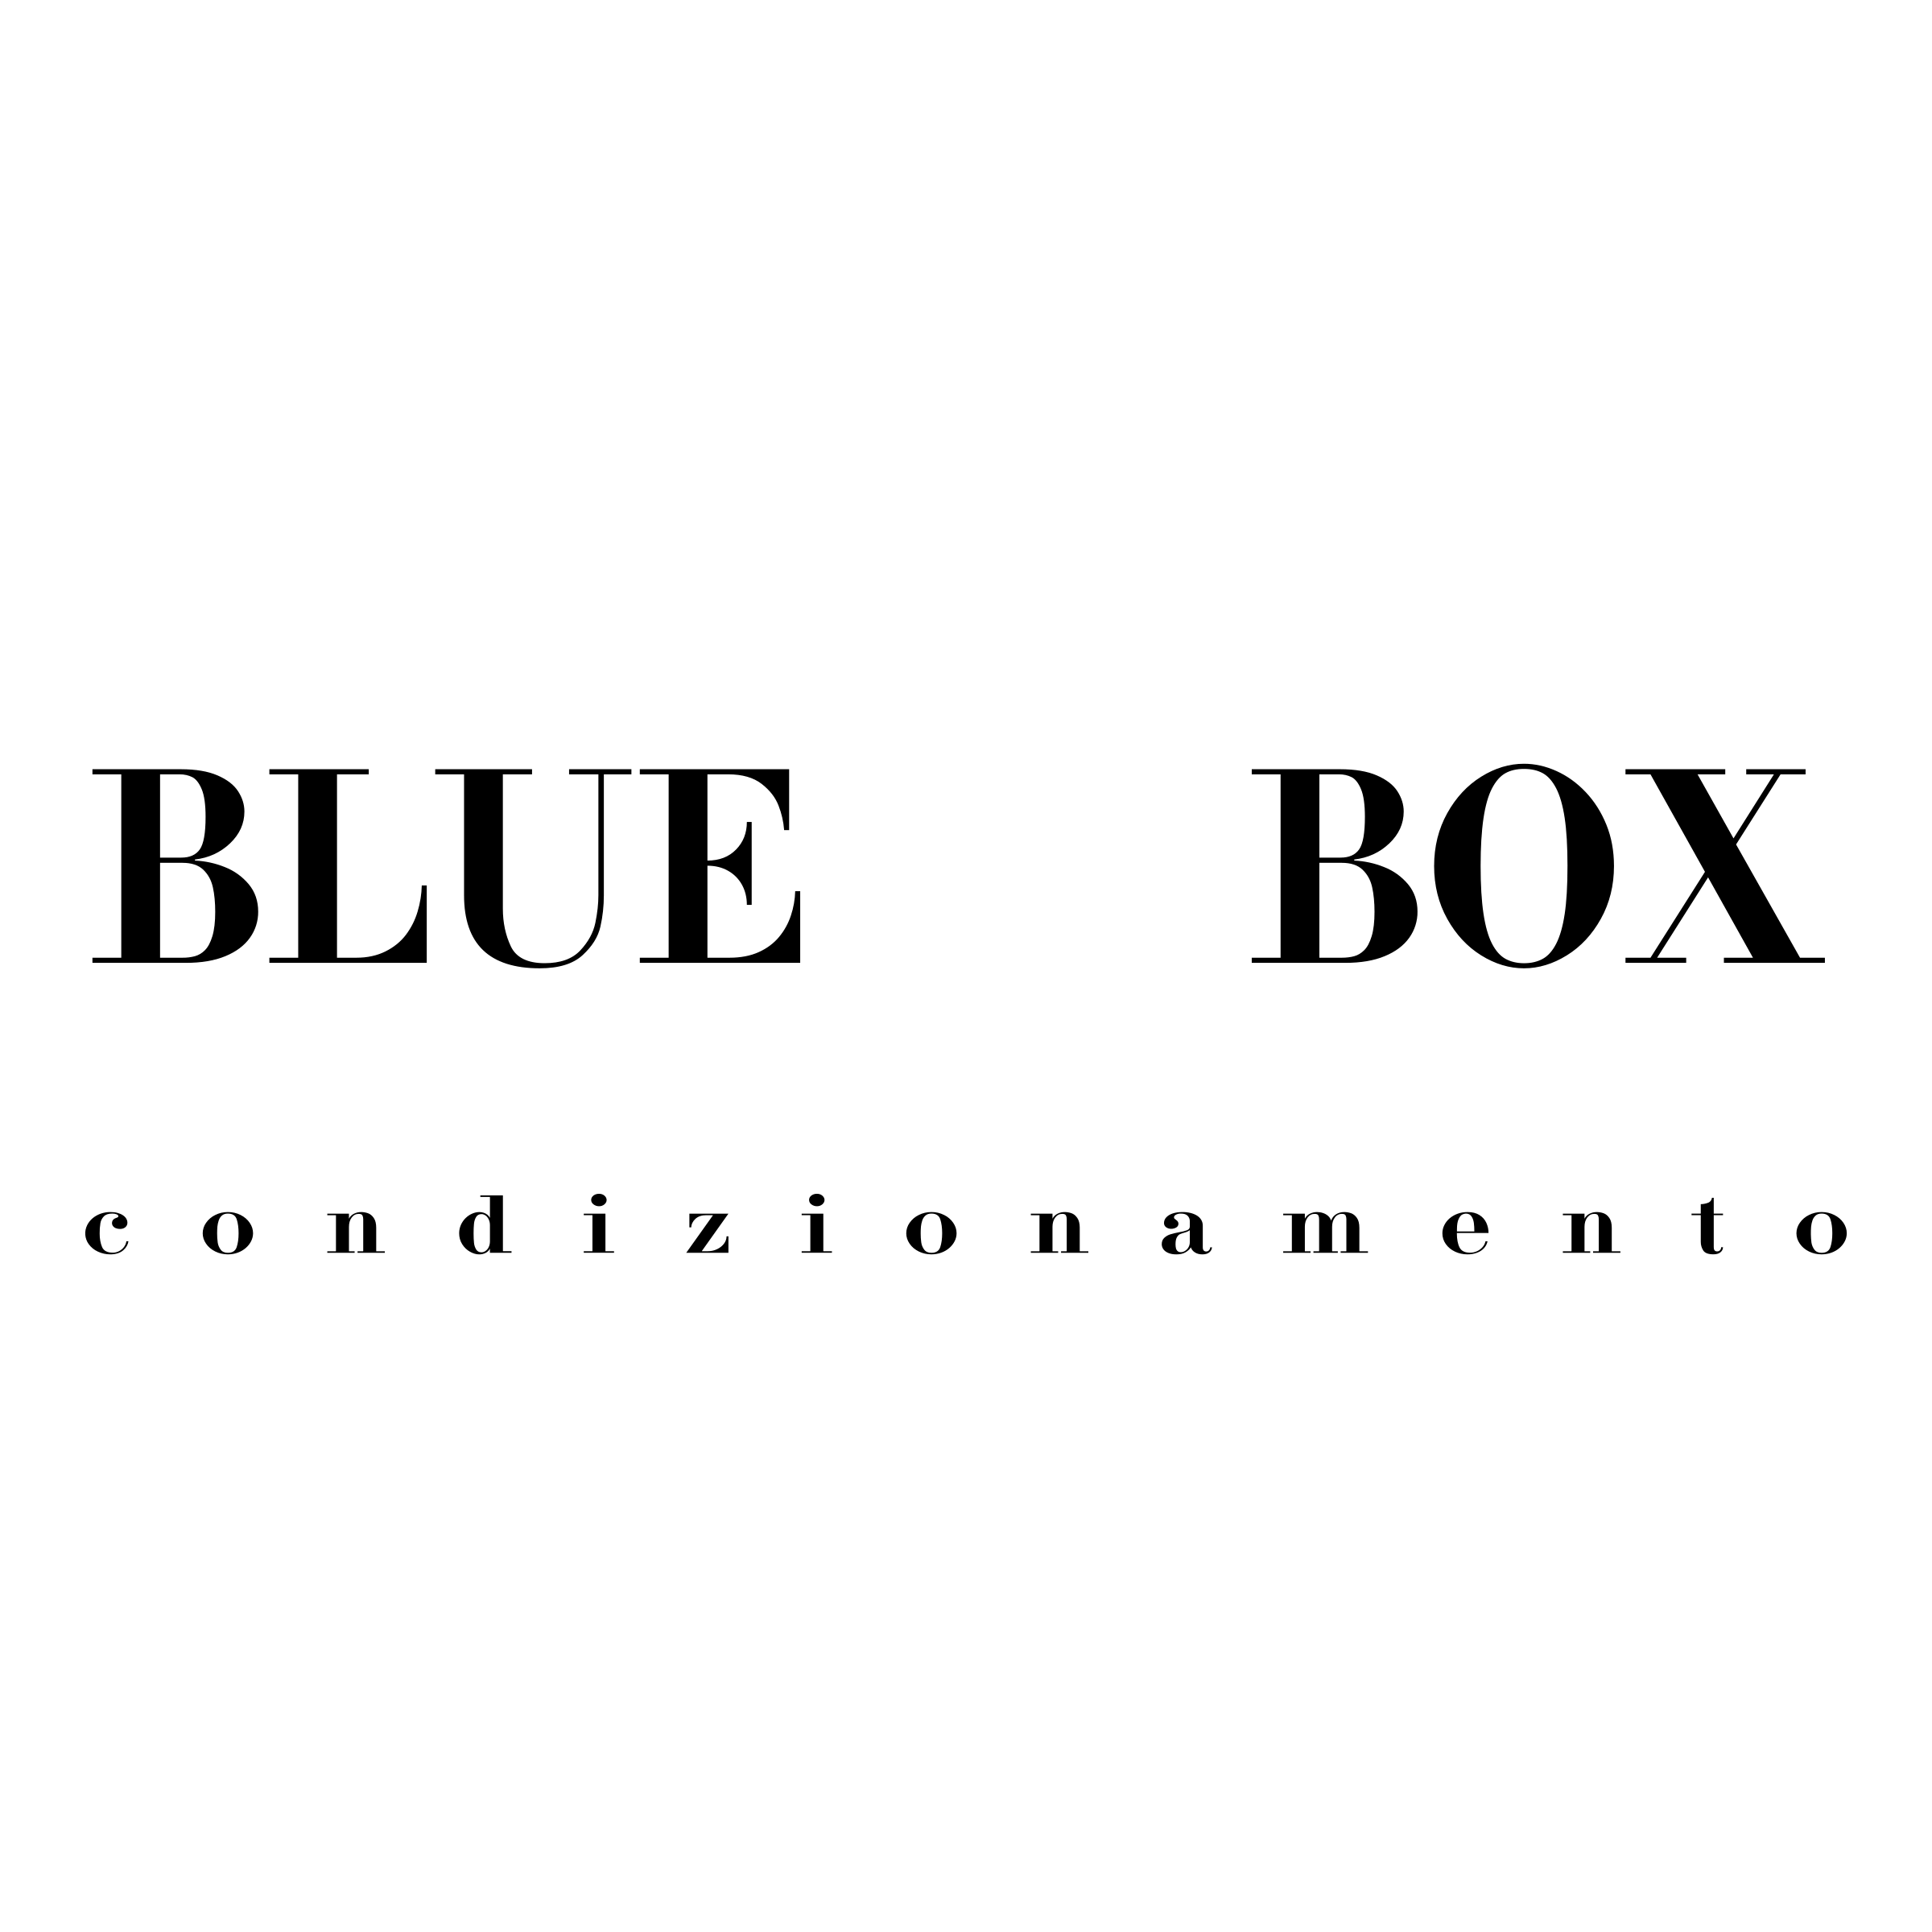 Blue Box with White a Logo - Blue Box Logo PNG Transparent & SVG Vector